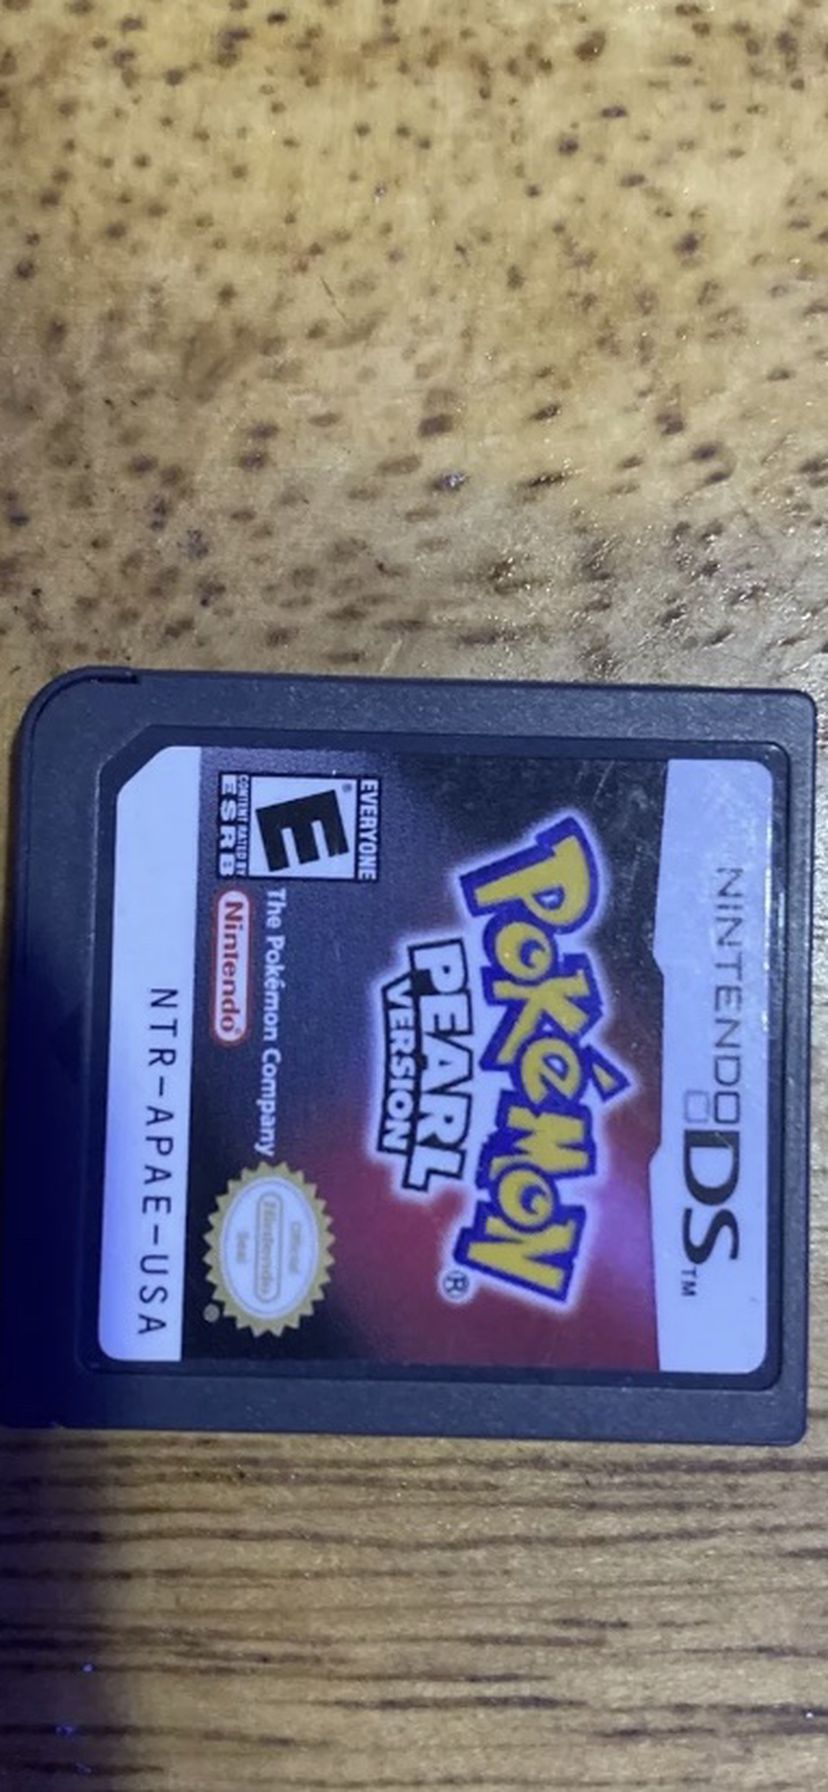 Pokémon Pearl Nintendo DS